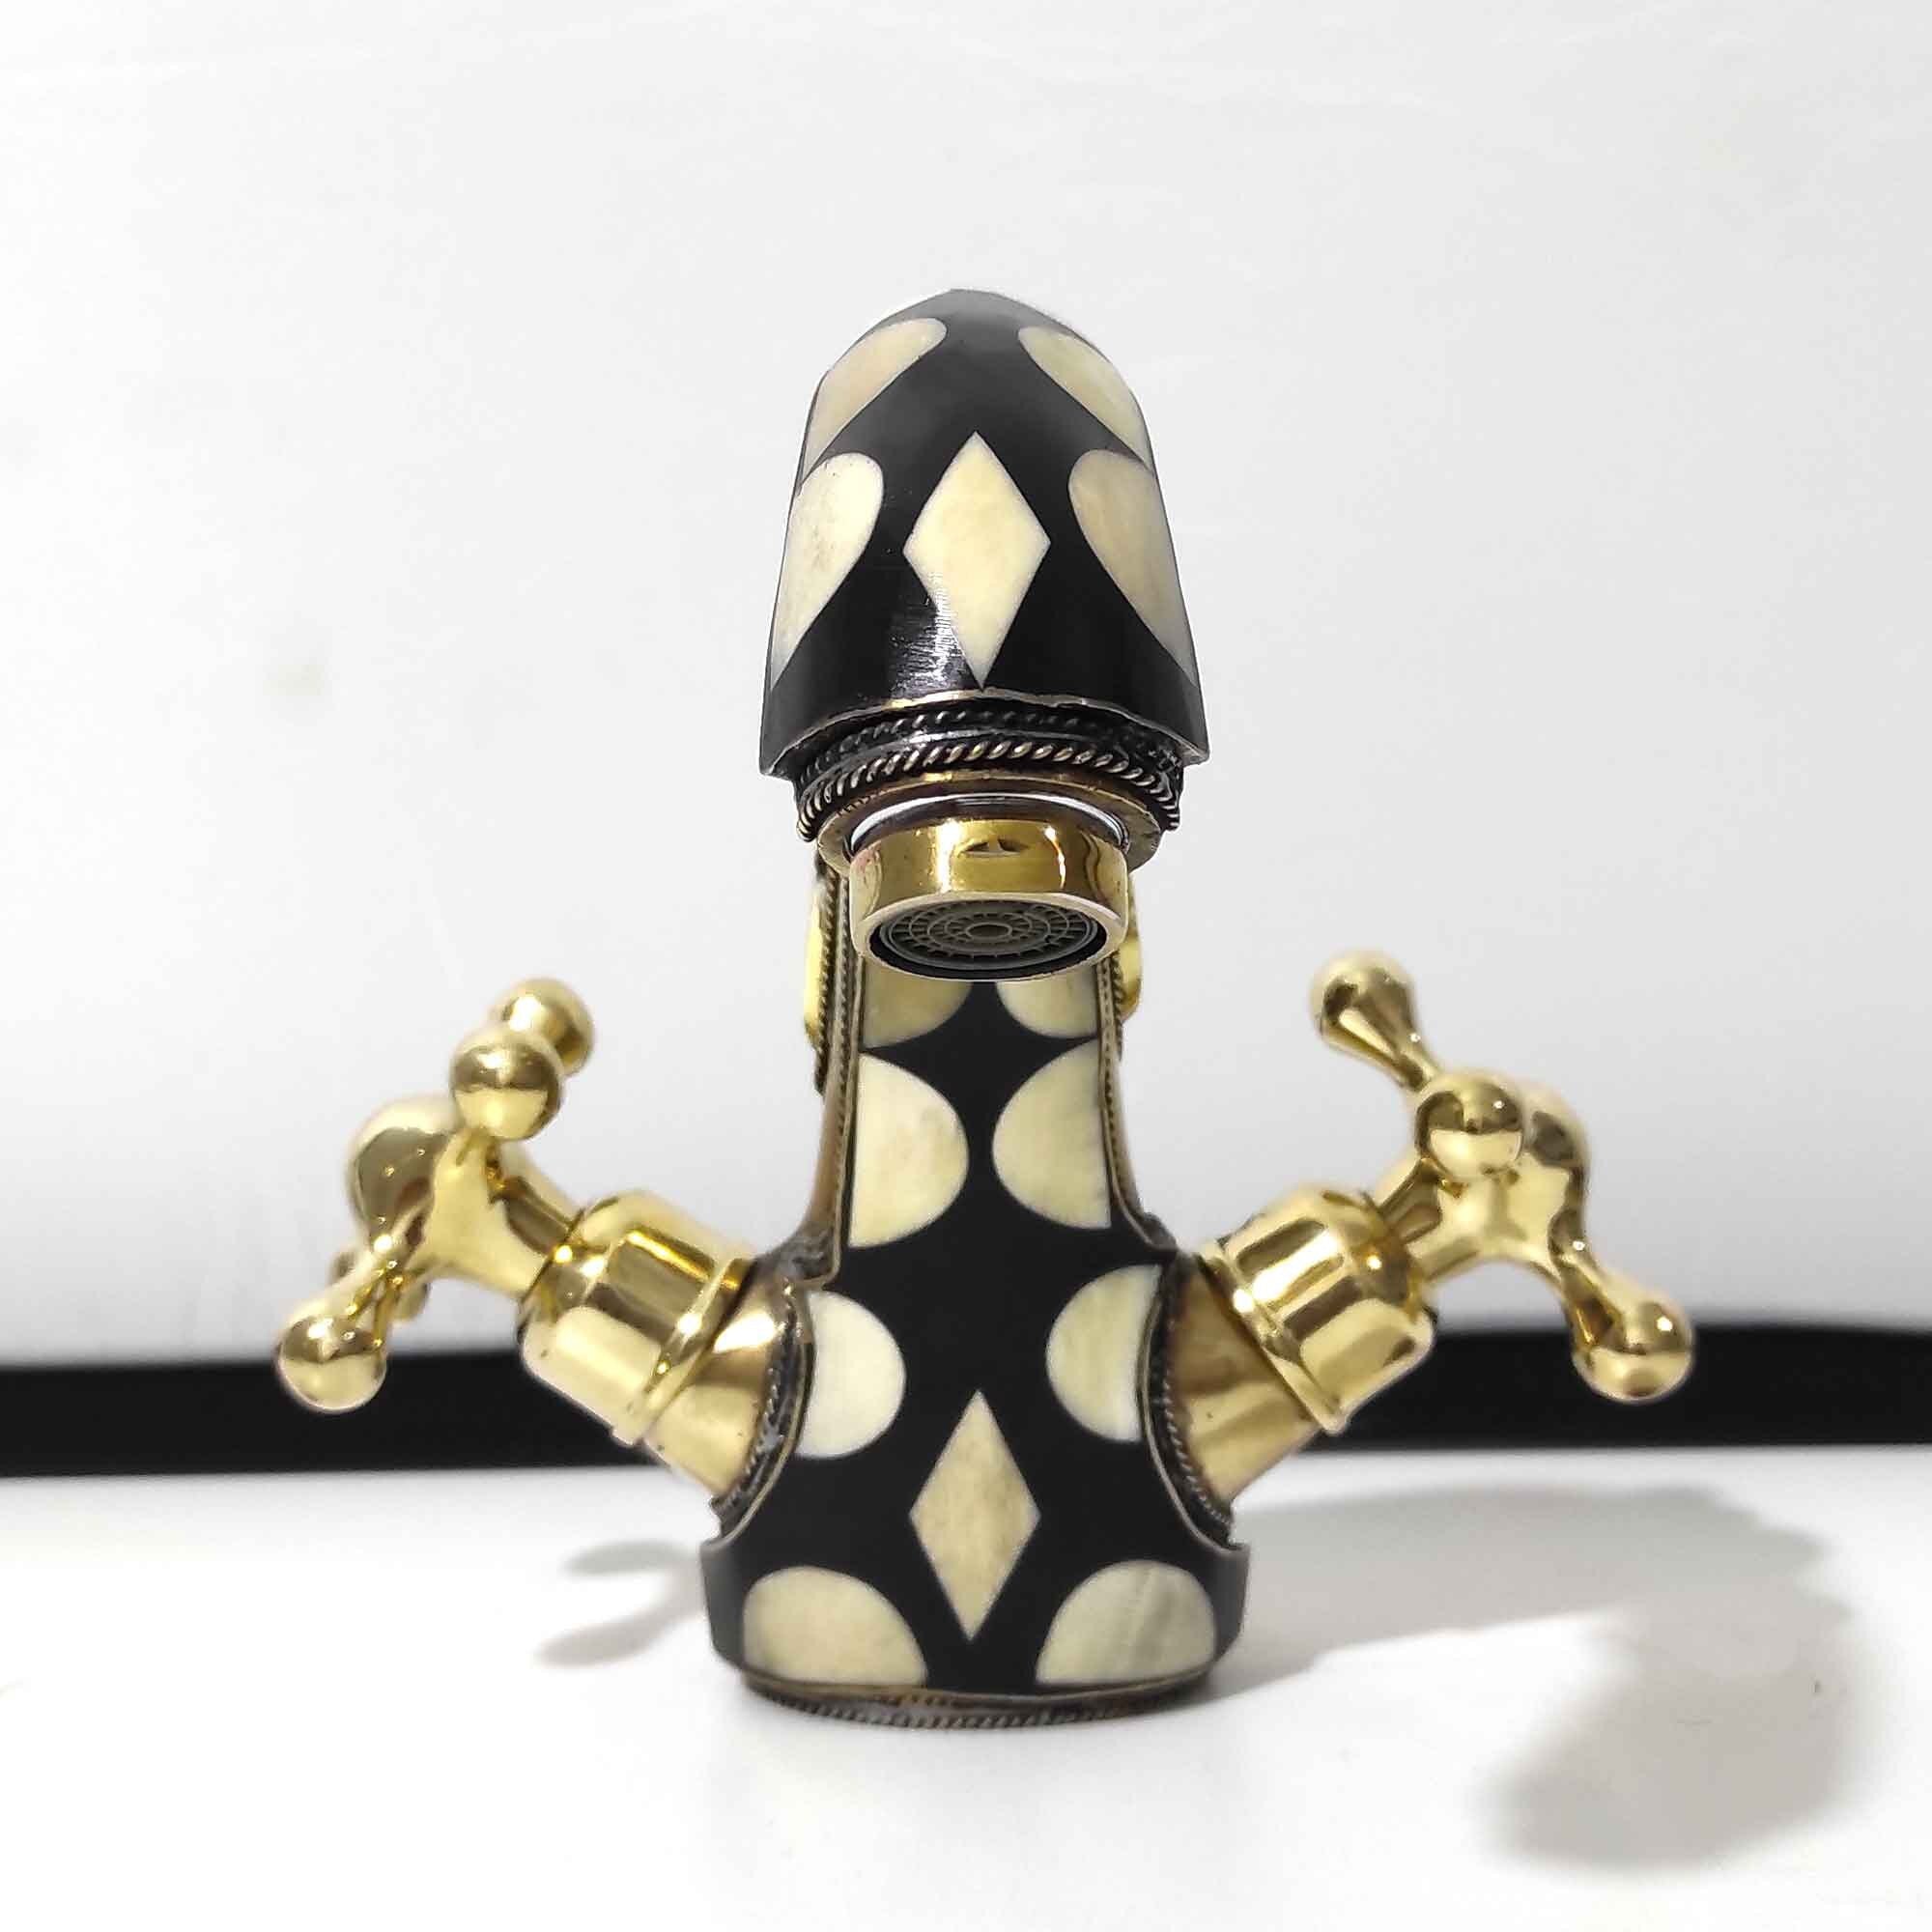 Unlacquered Brass Sink Faucet 